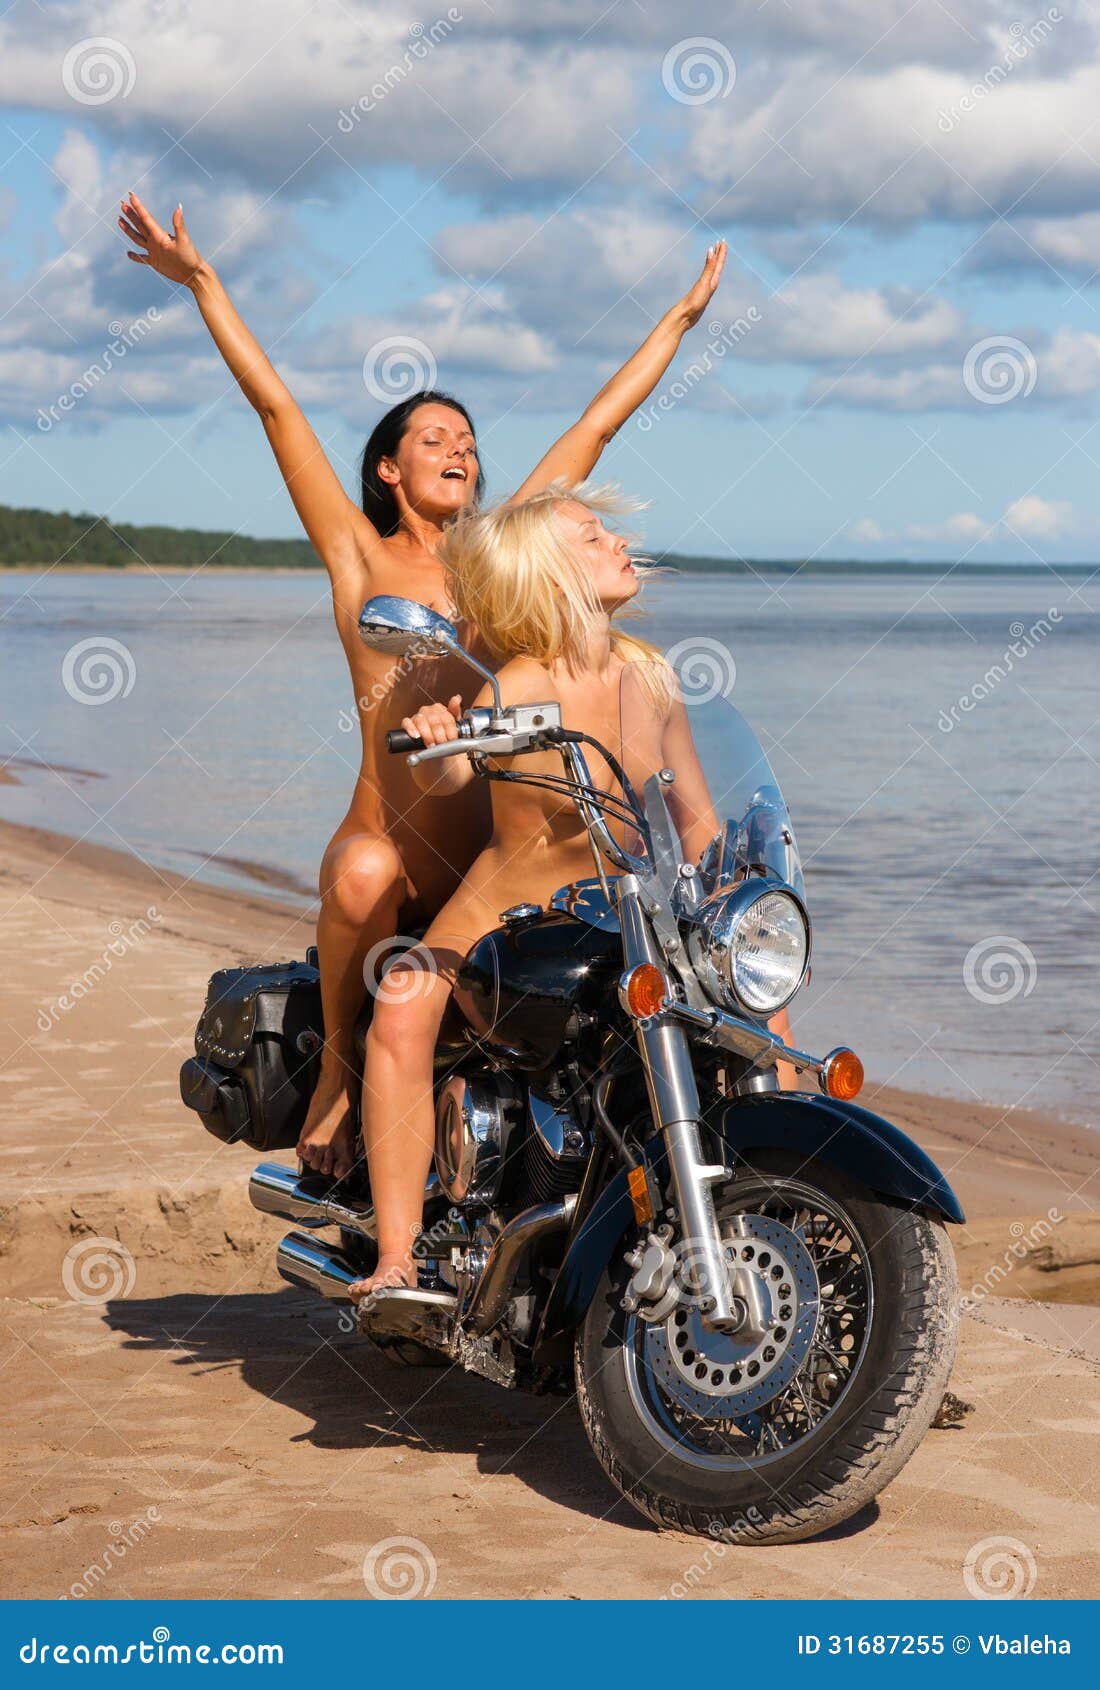 Motorcycle women naked